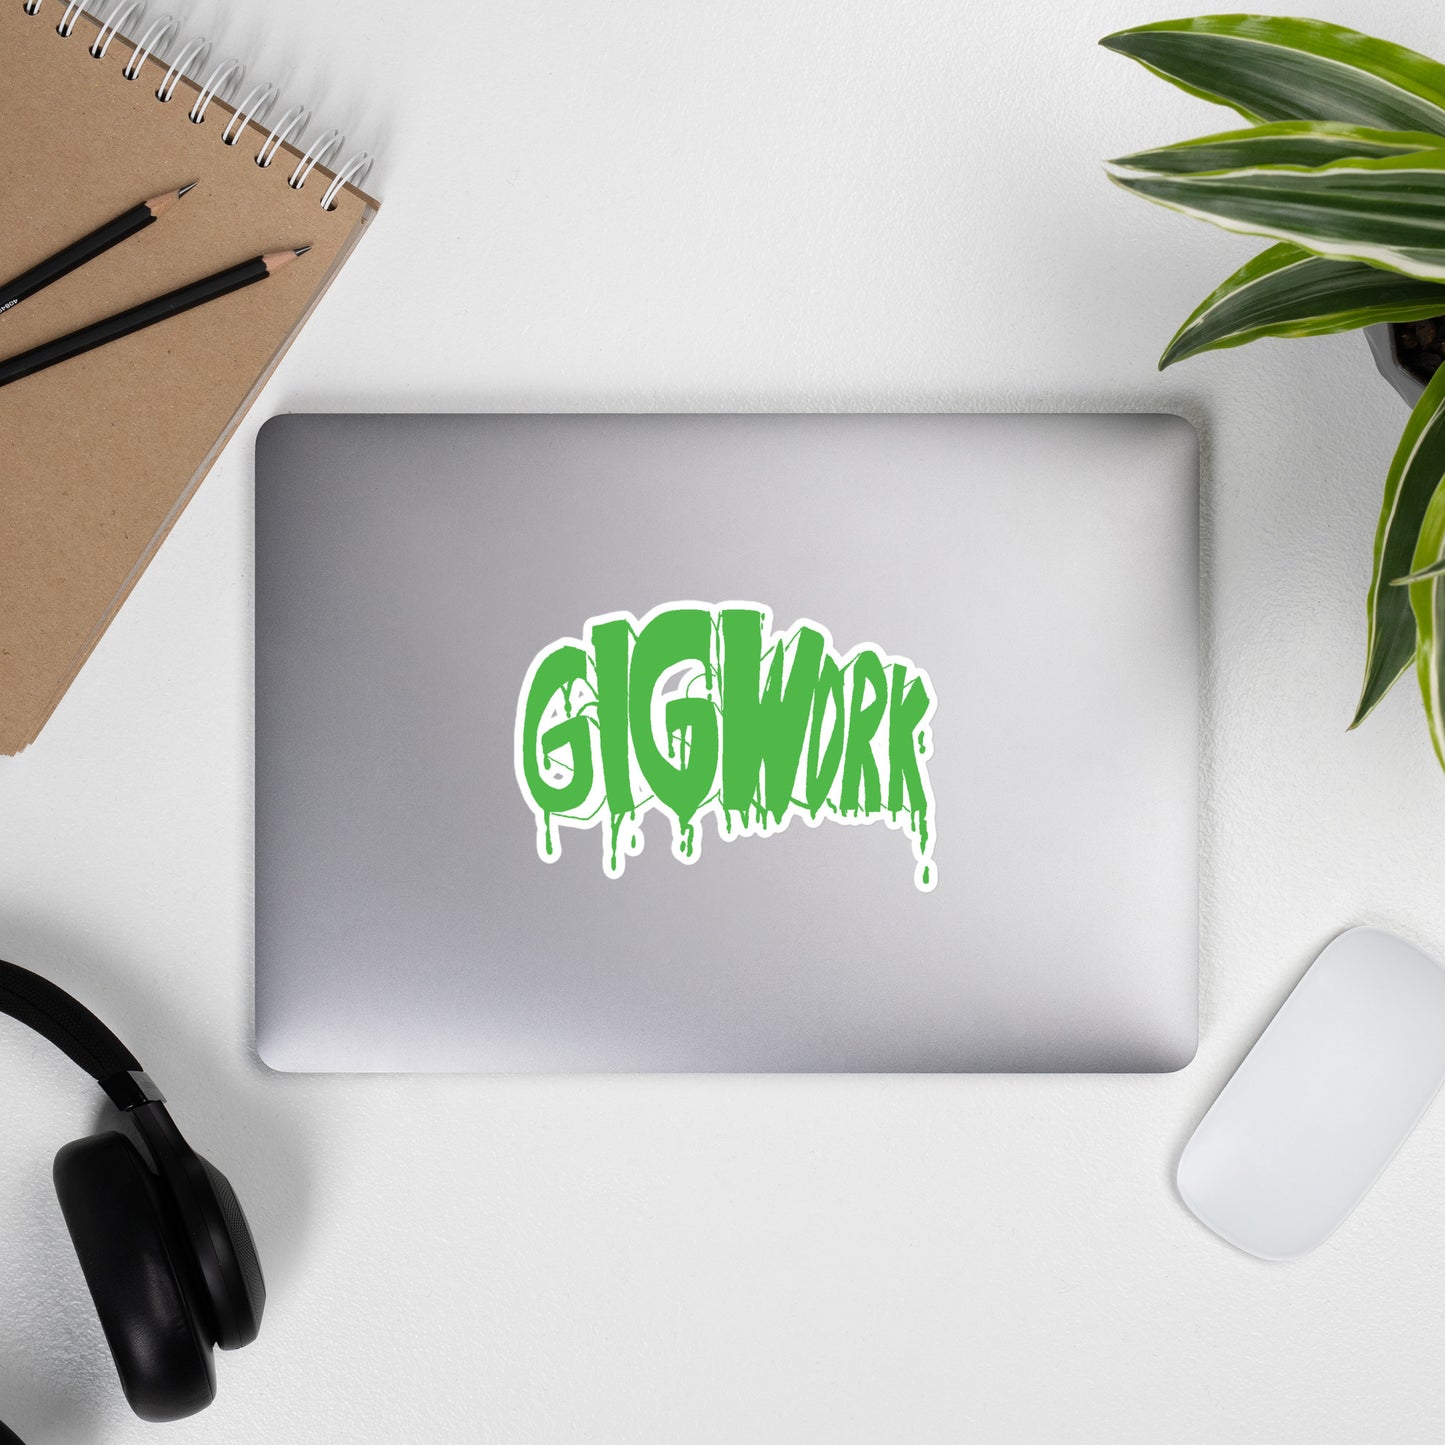 Gig Work Logo Sticker